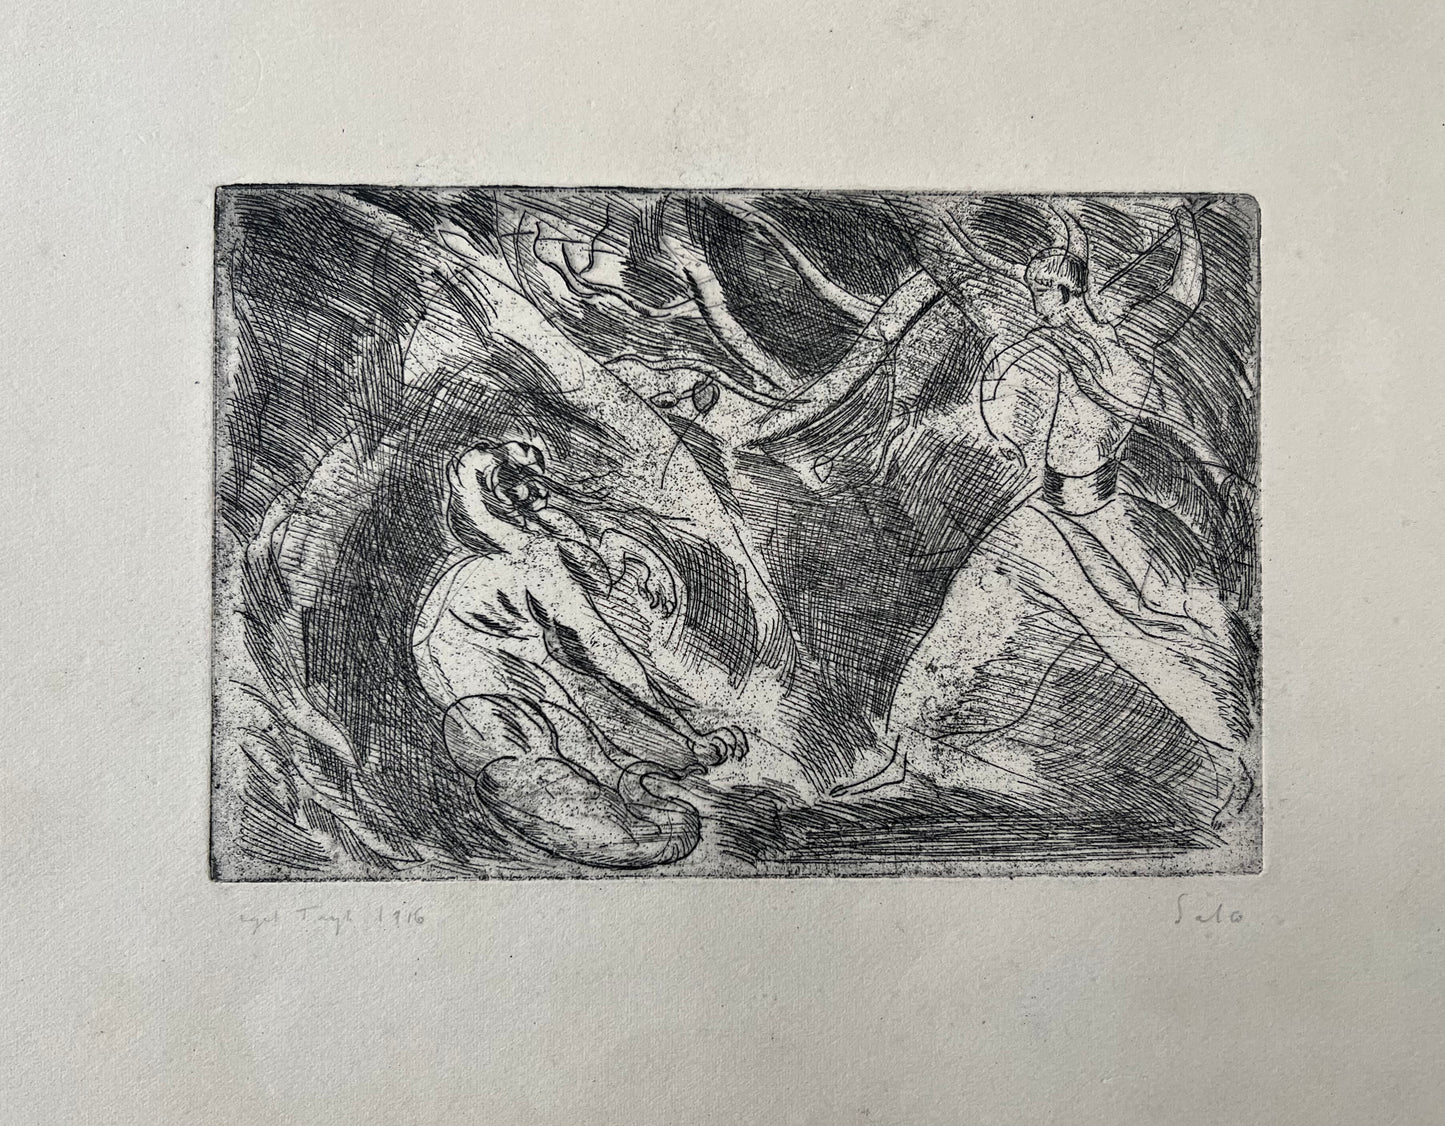 Axel Salto. "Dragon Fight", 1916